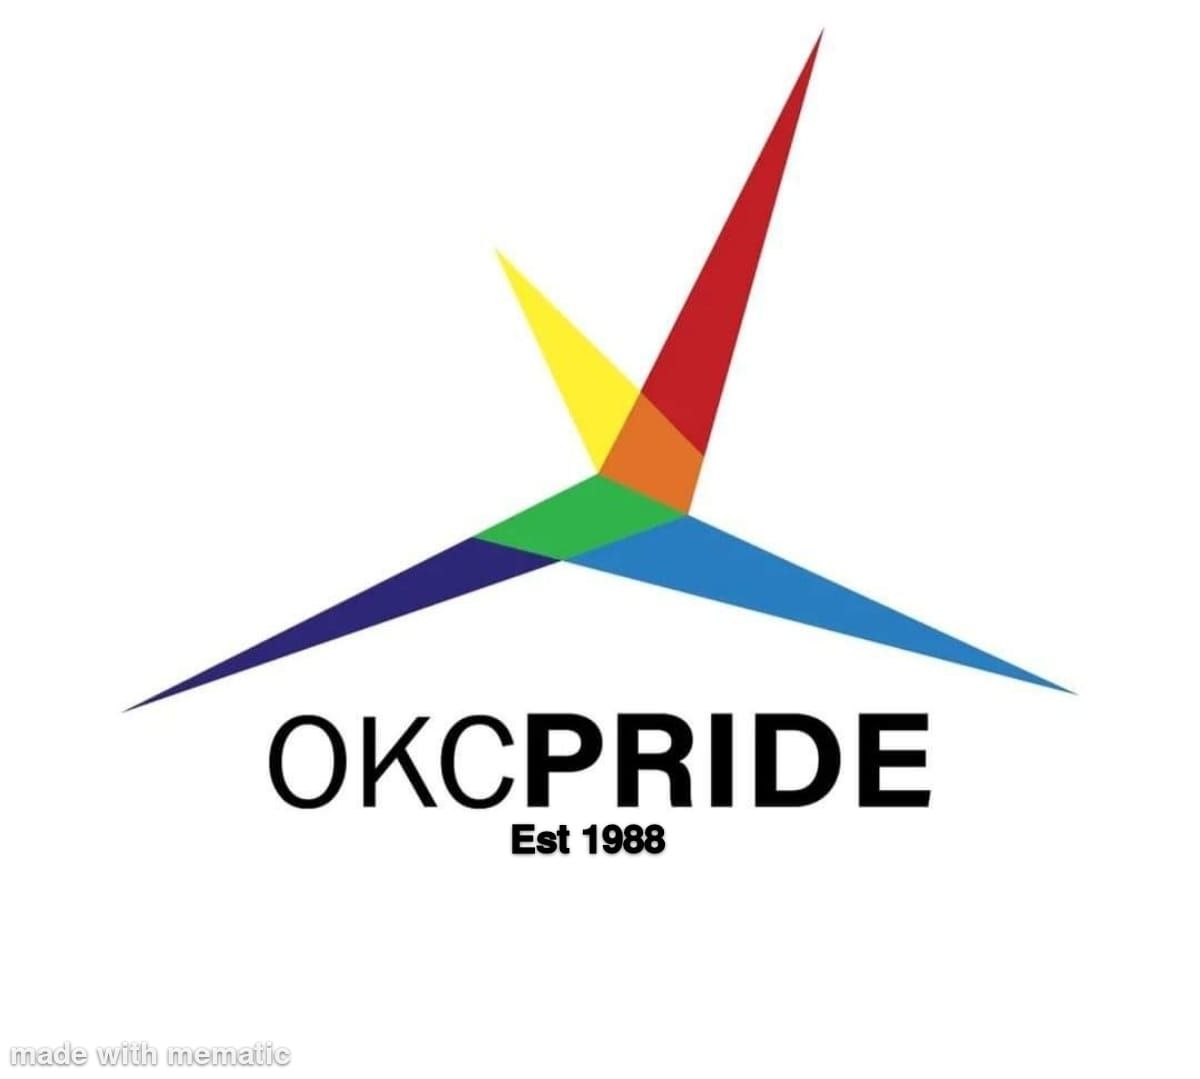 36th Annual Okc Pride on 39th Street Festival